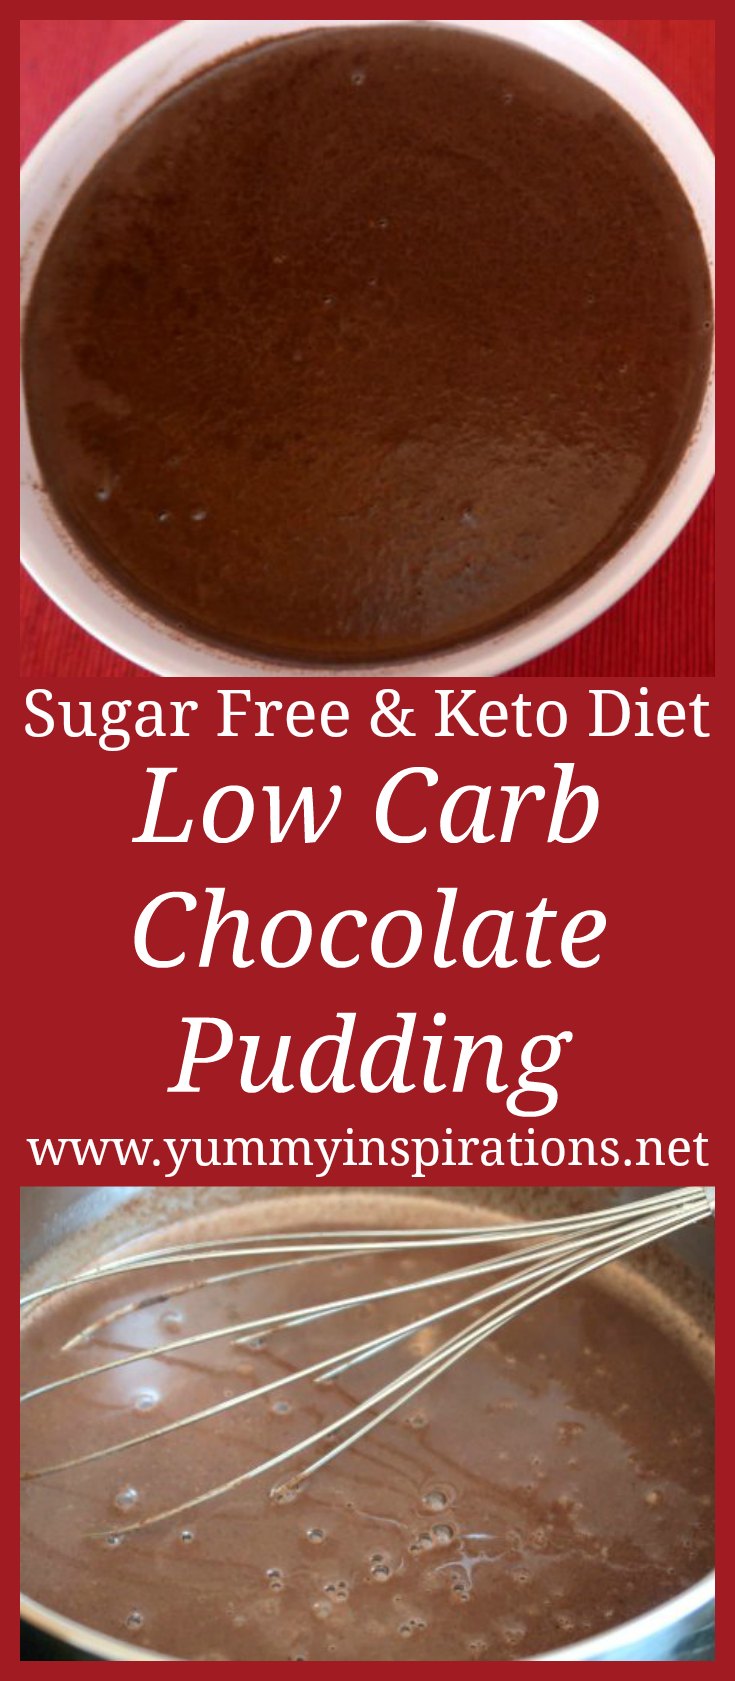 Low Carb Chocolate Pudding Recipe - Easy Sugar Free Keto ...